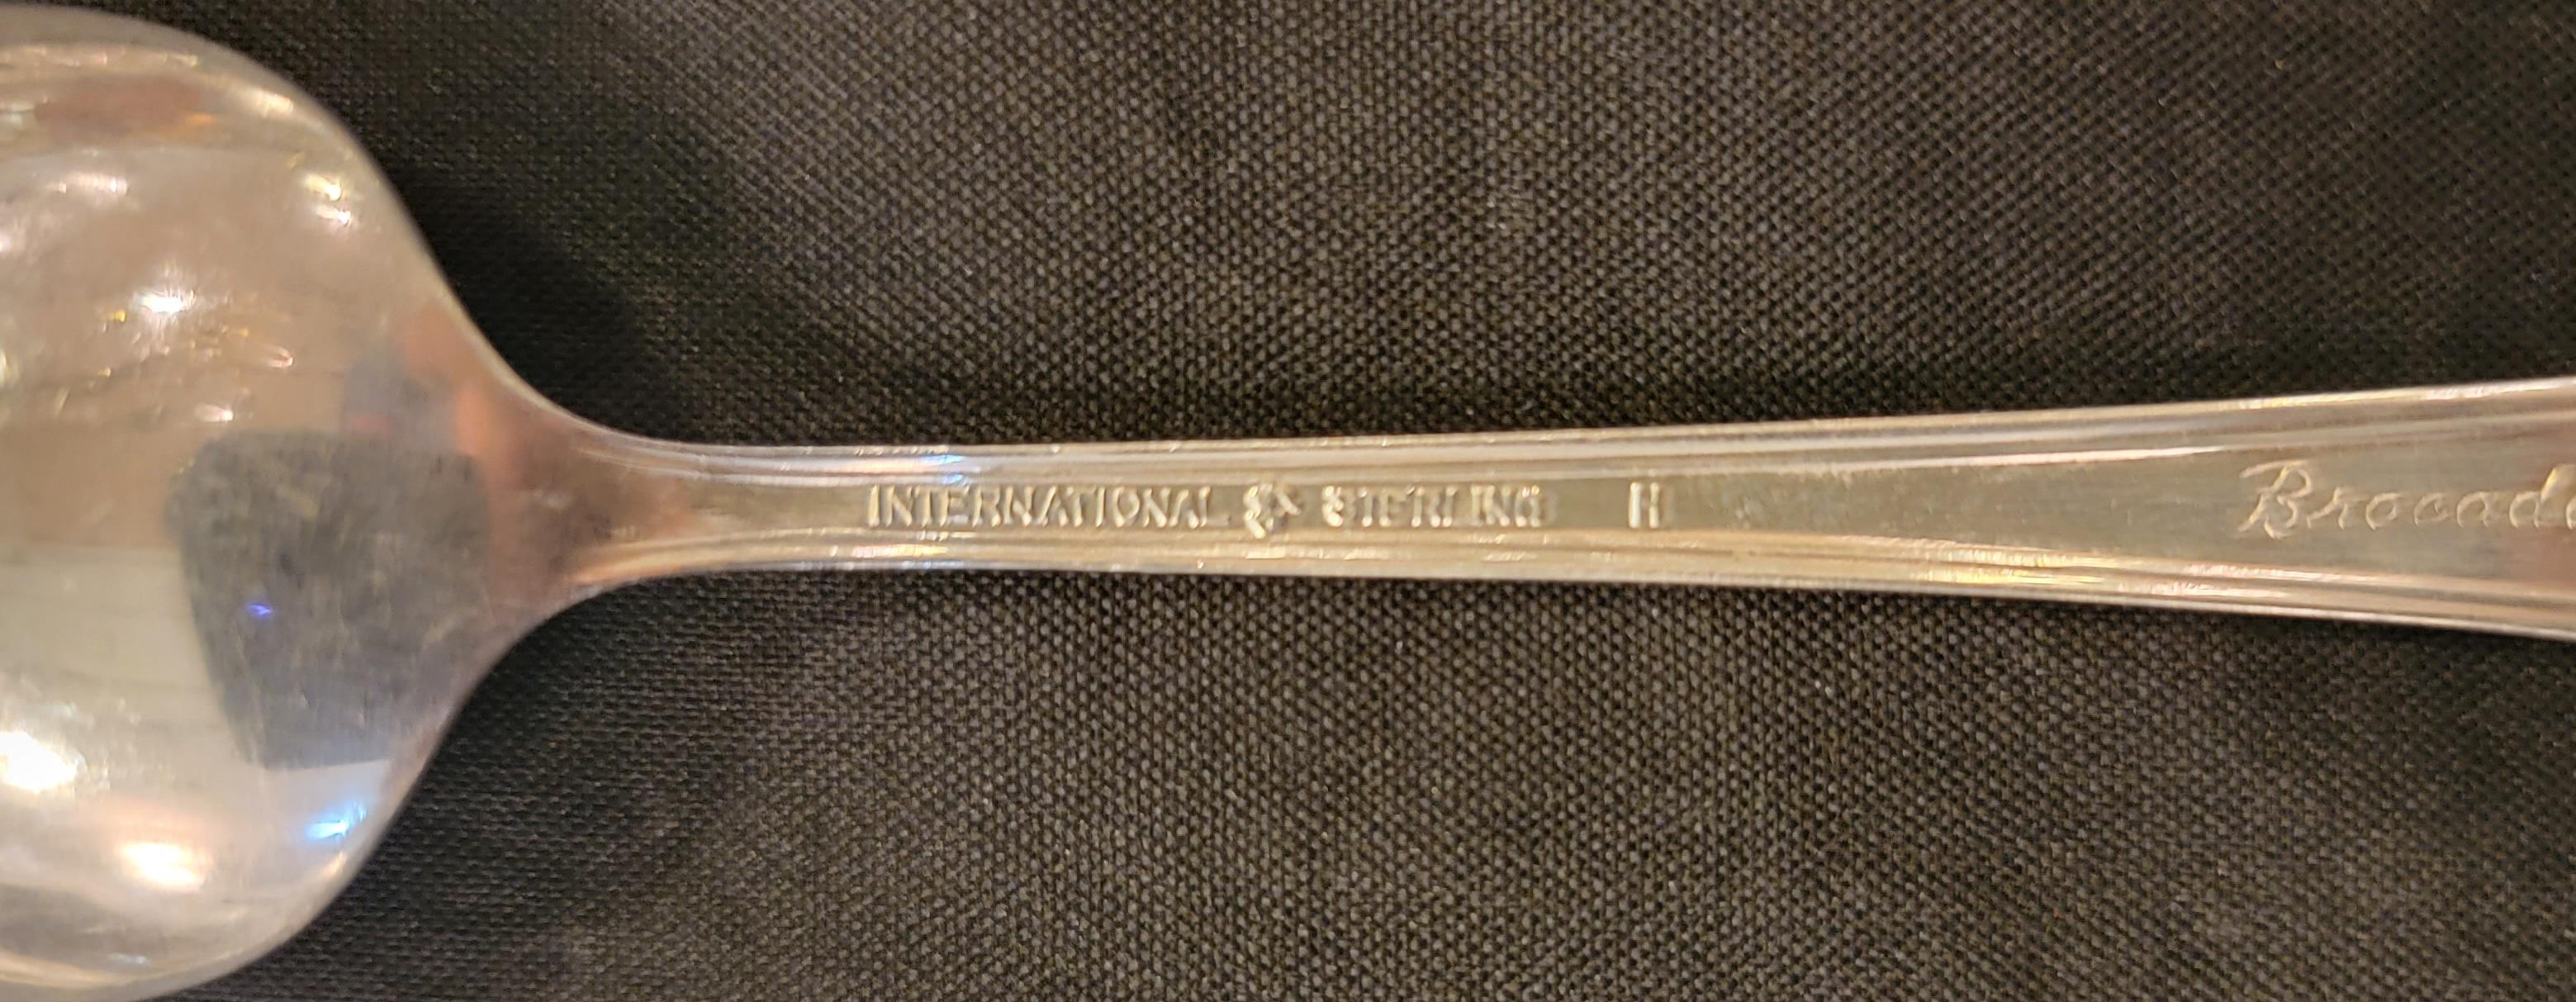 52 Piece International Sterling Silver Set Serving for 8 For Sale 2